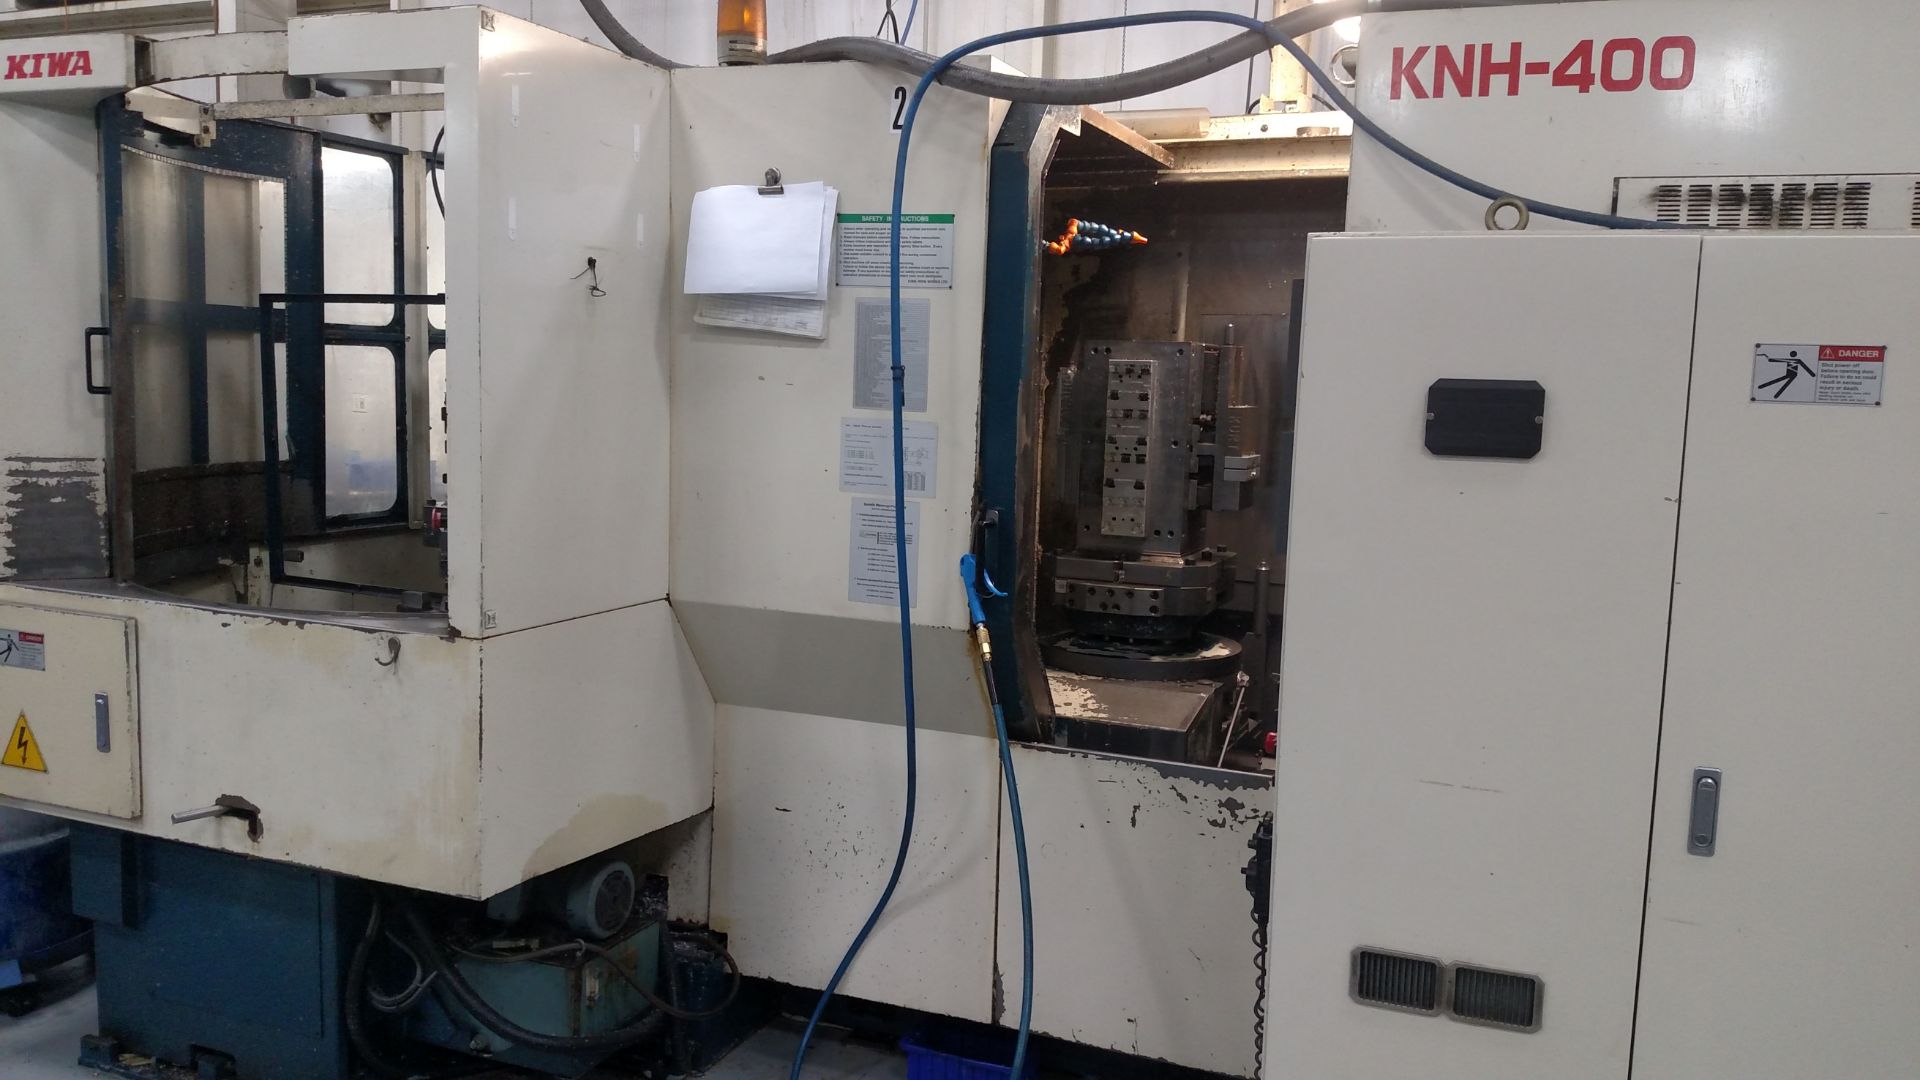 KIWA KNH-400 CNC HORIZONTAL MACHINING CENTER, FANUC 18i-M CONTROL, FULL 4TH AXIS, 5-PALLET - Image 3 of 15